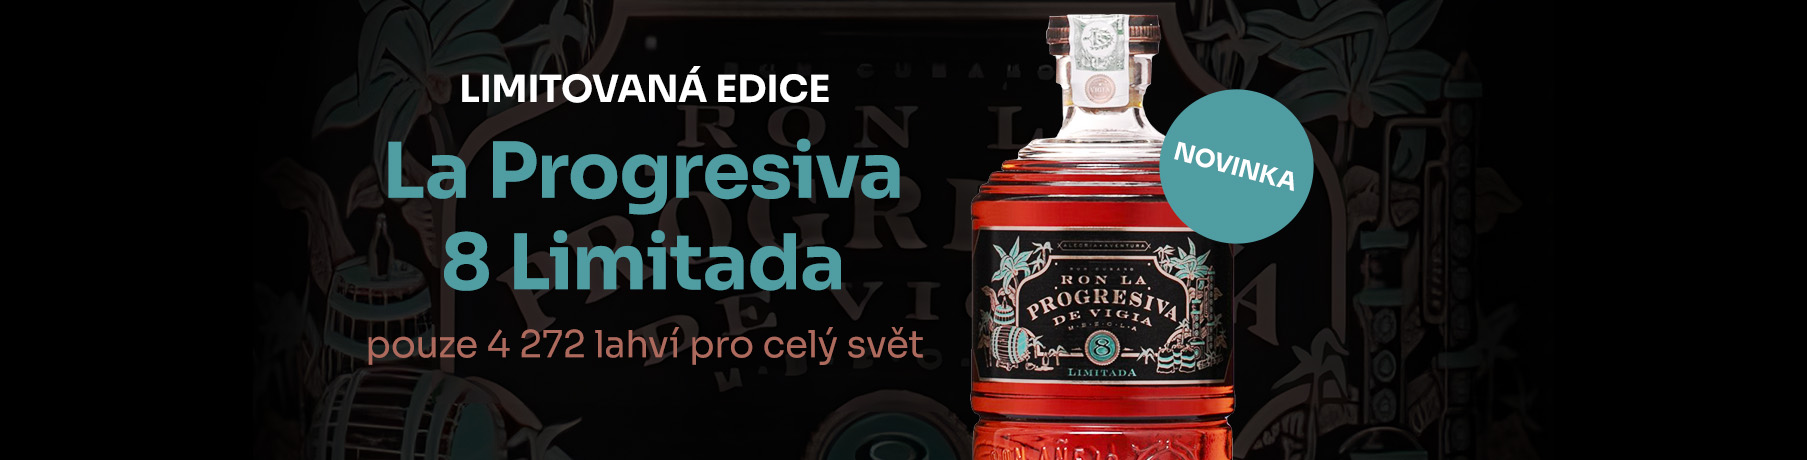 Limitovaná edice rumu La Progresiva 8 Limitada